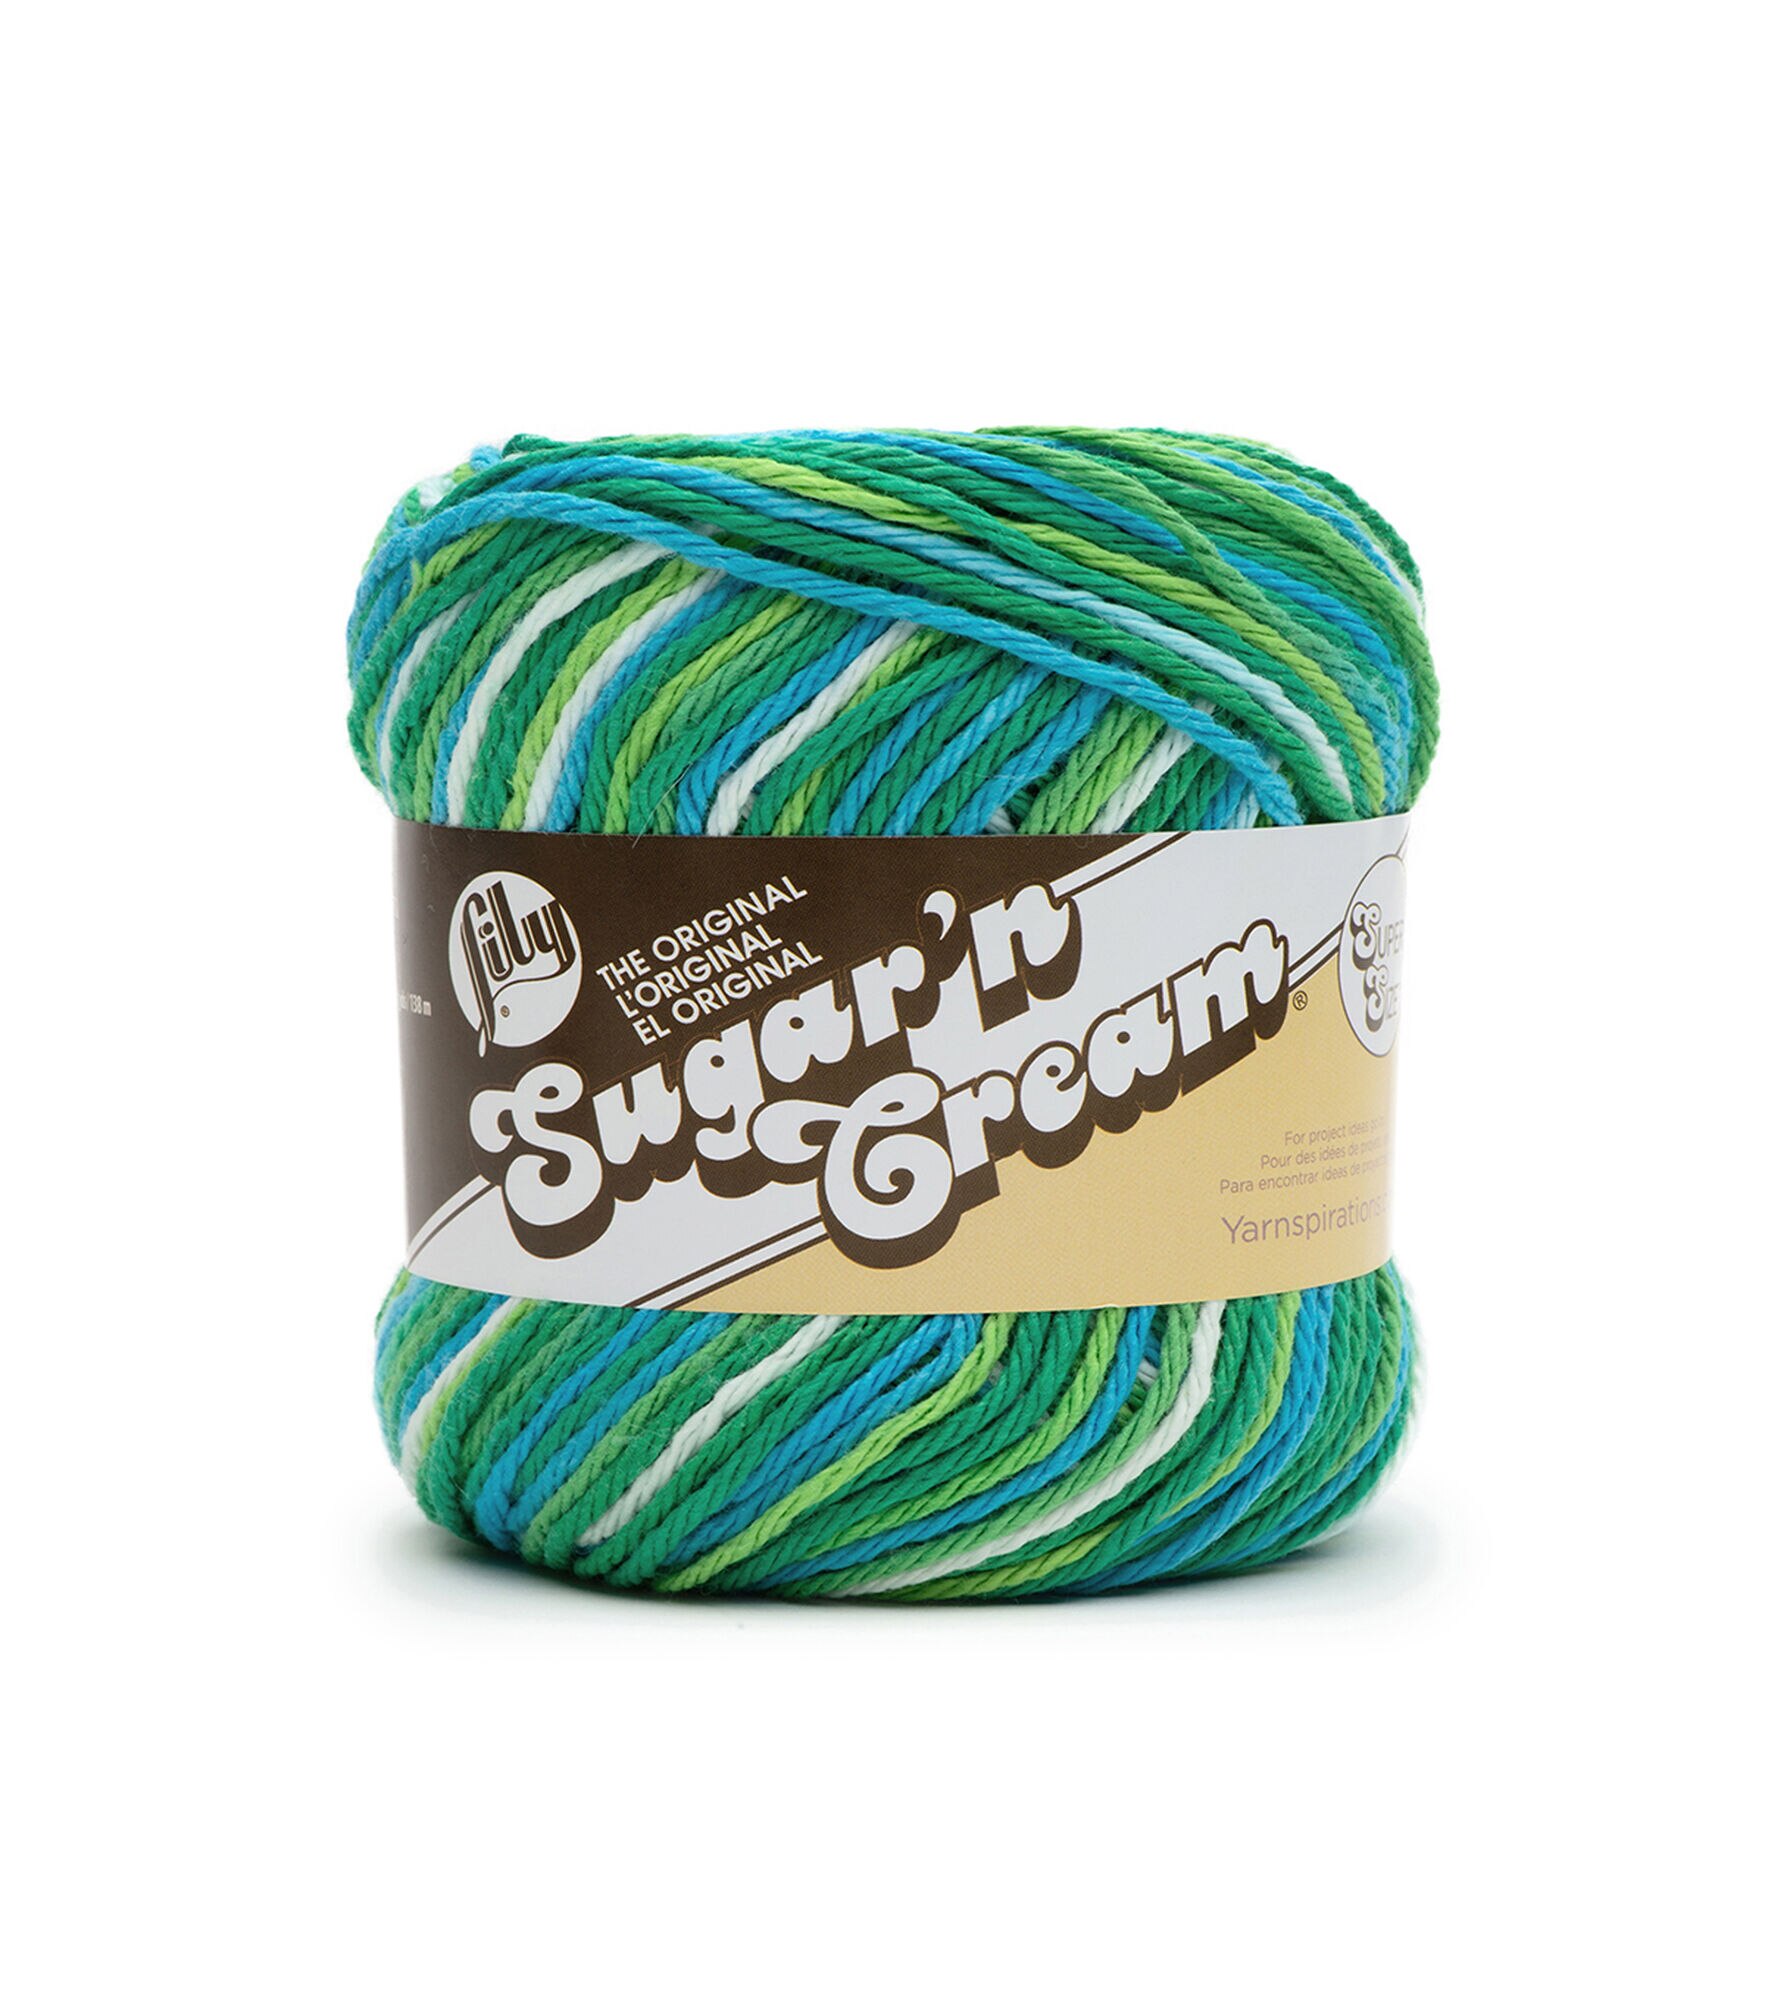 Lily Sugar'n Cream Yarn - Ombres-Denim Blue Print, 1 count - Foods Co.